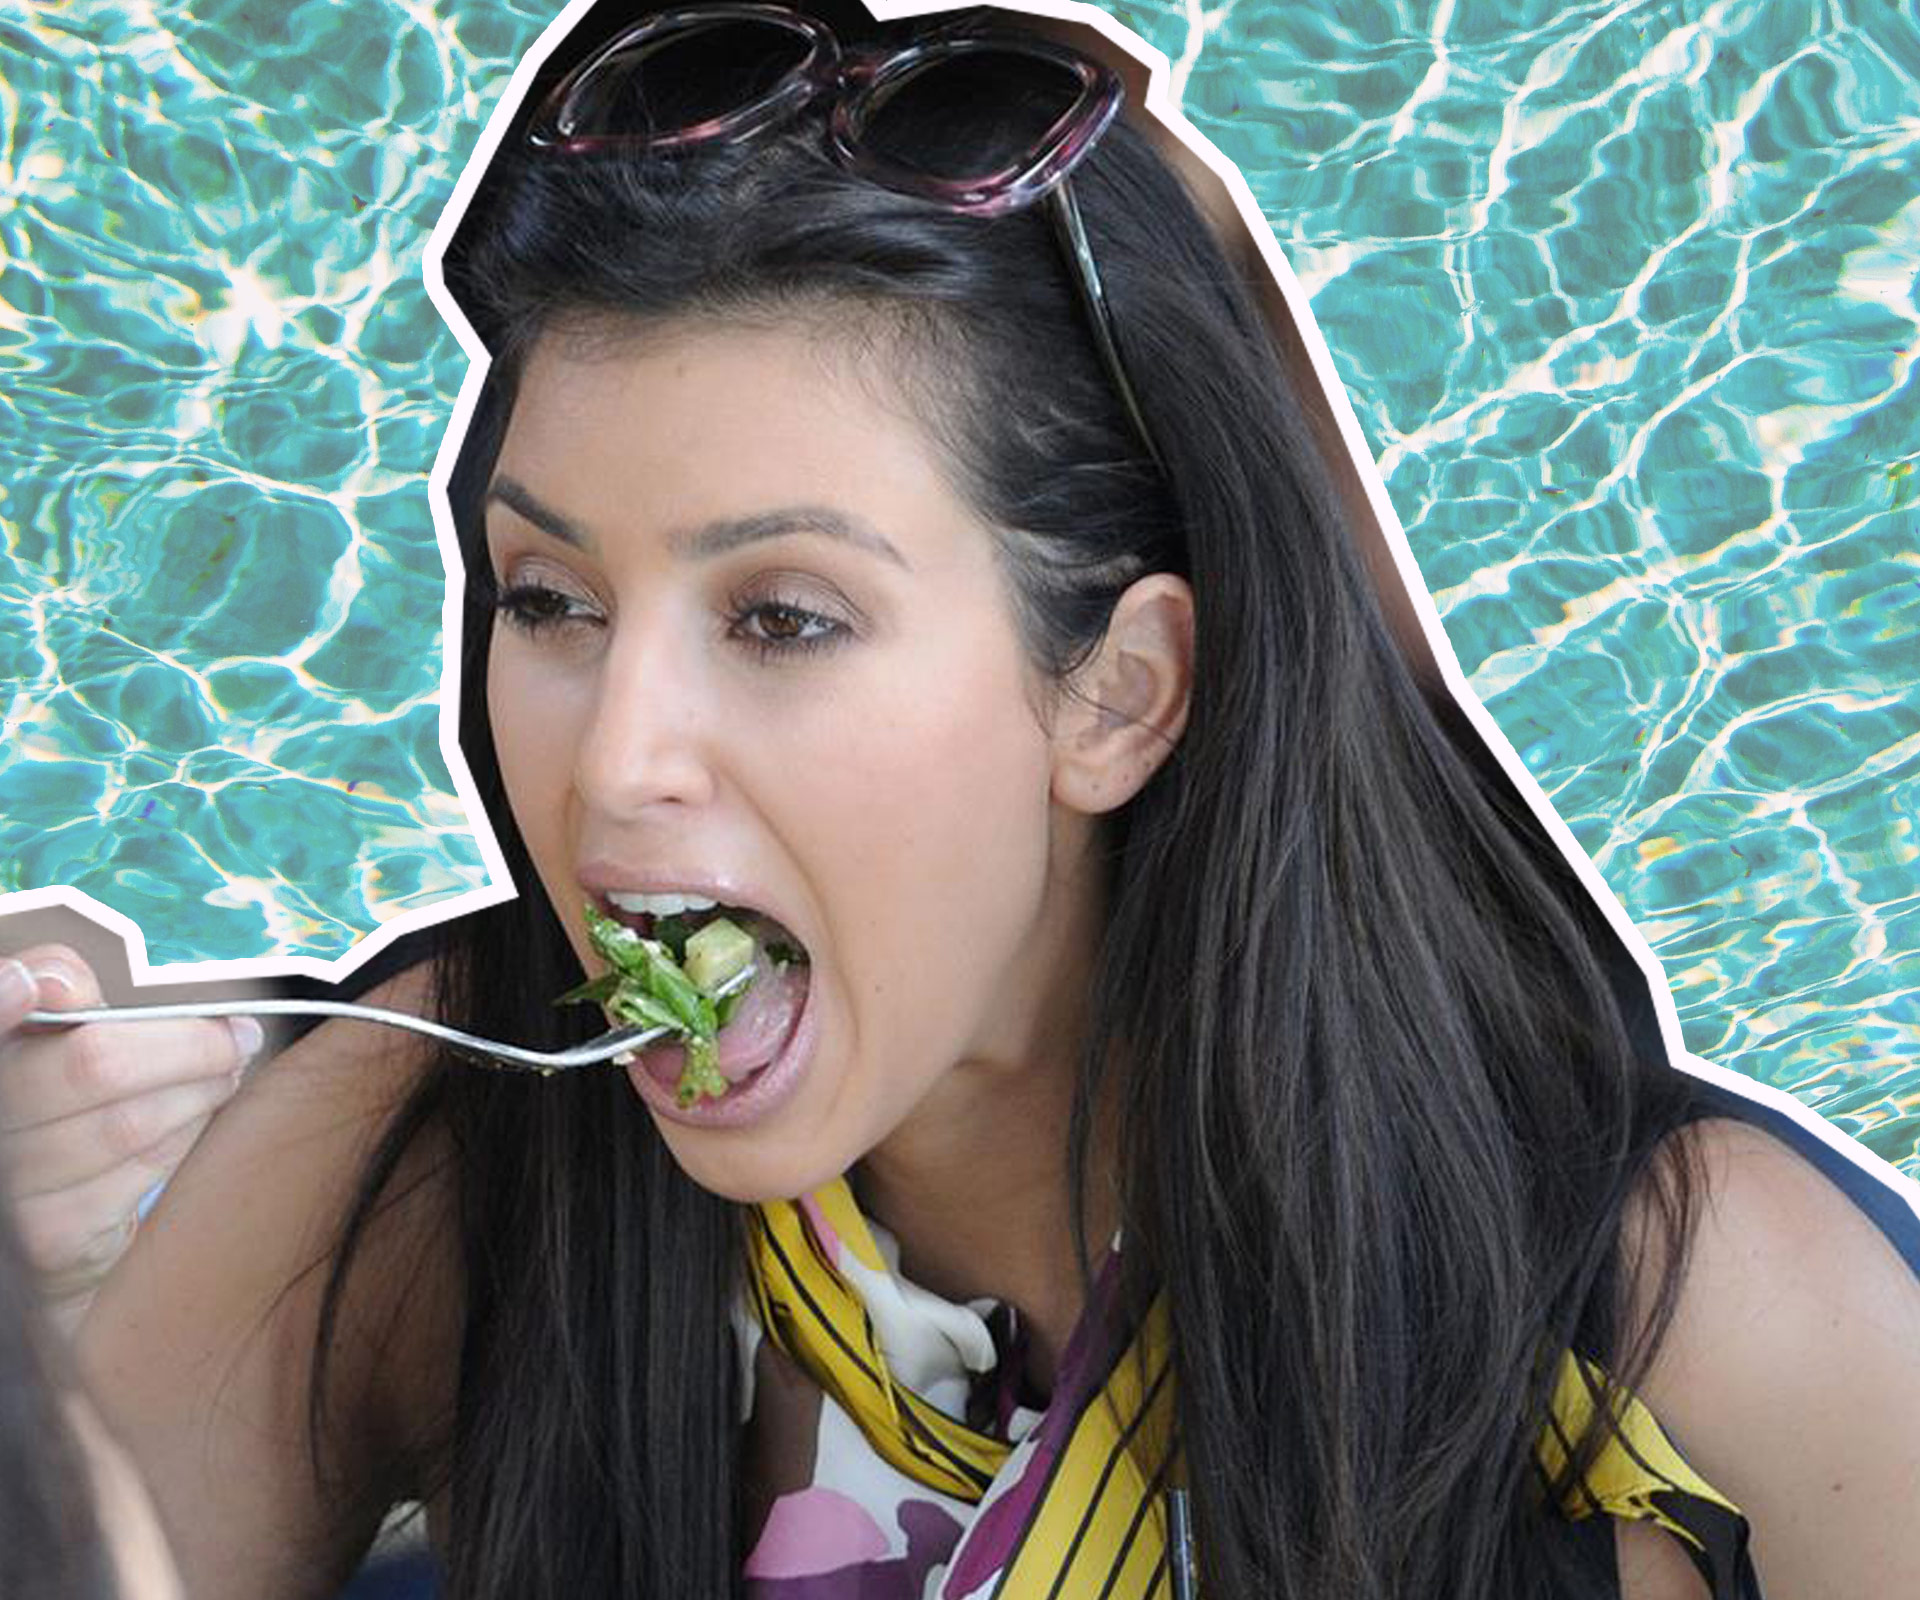 Kim Kardashian Atkins Diet 